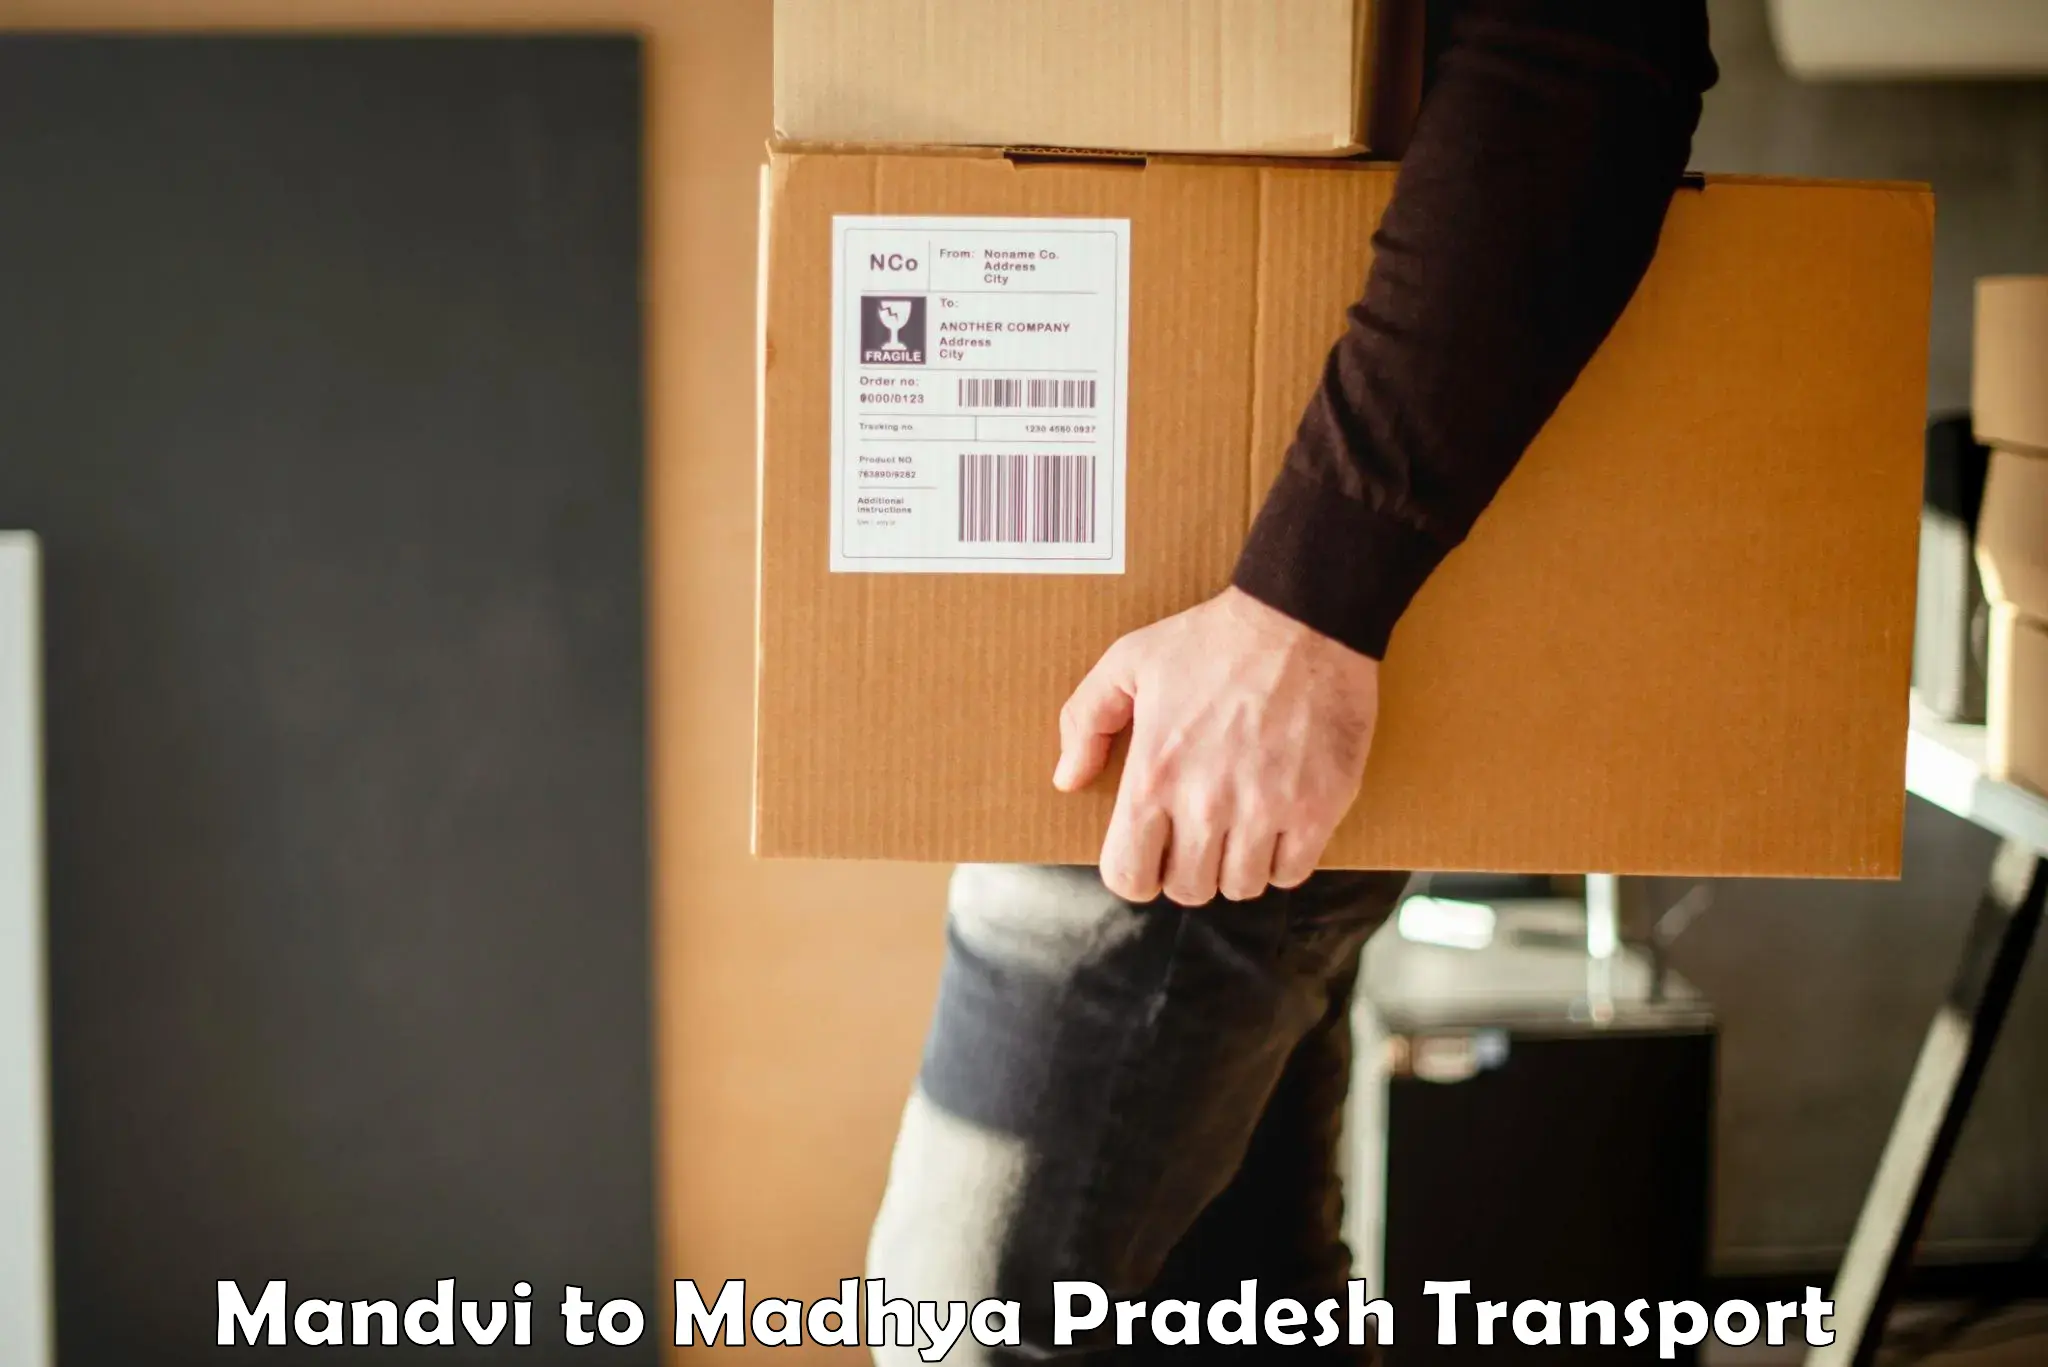 Truck transport companies in India Mandvi to Indore